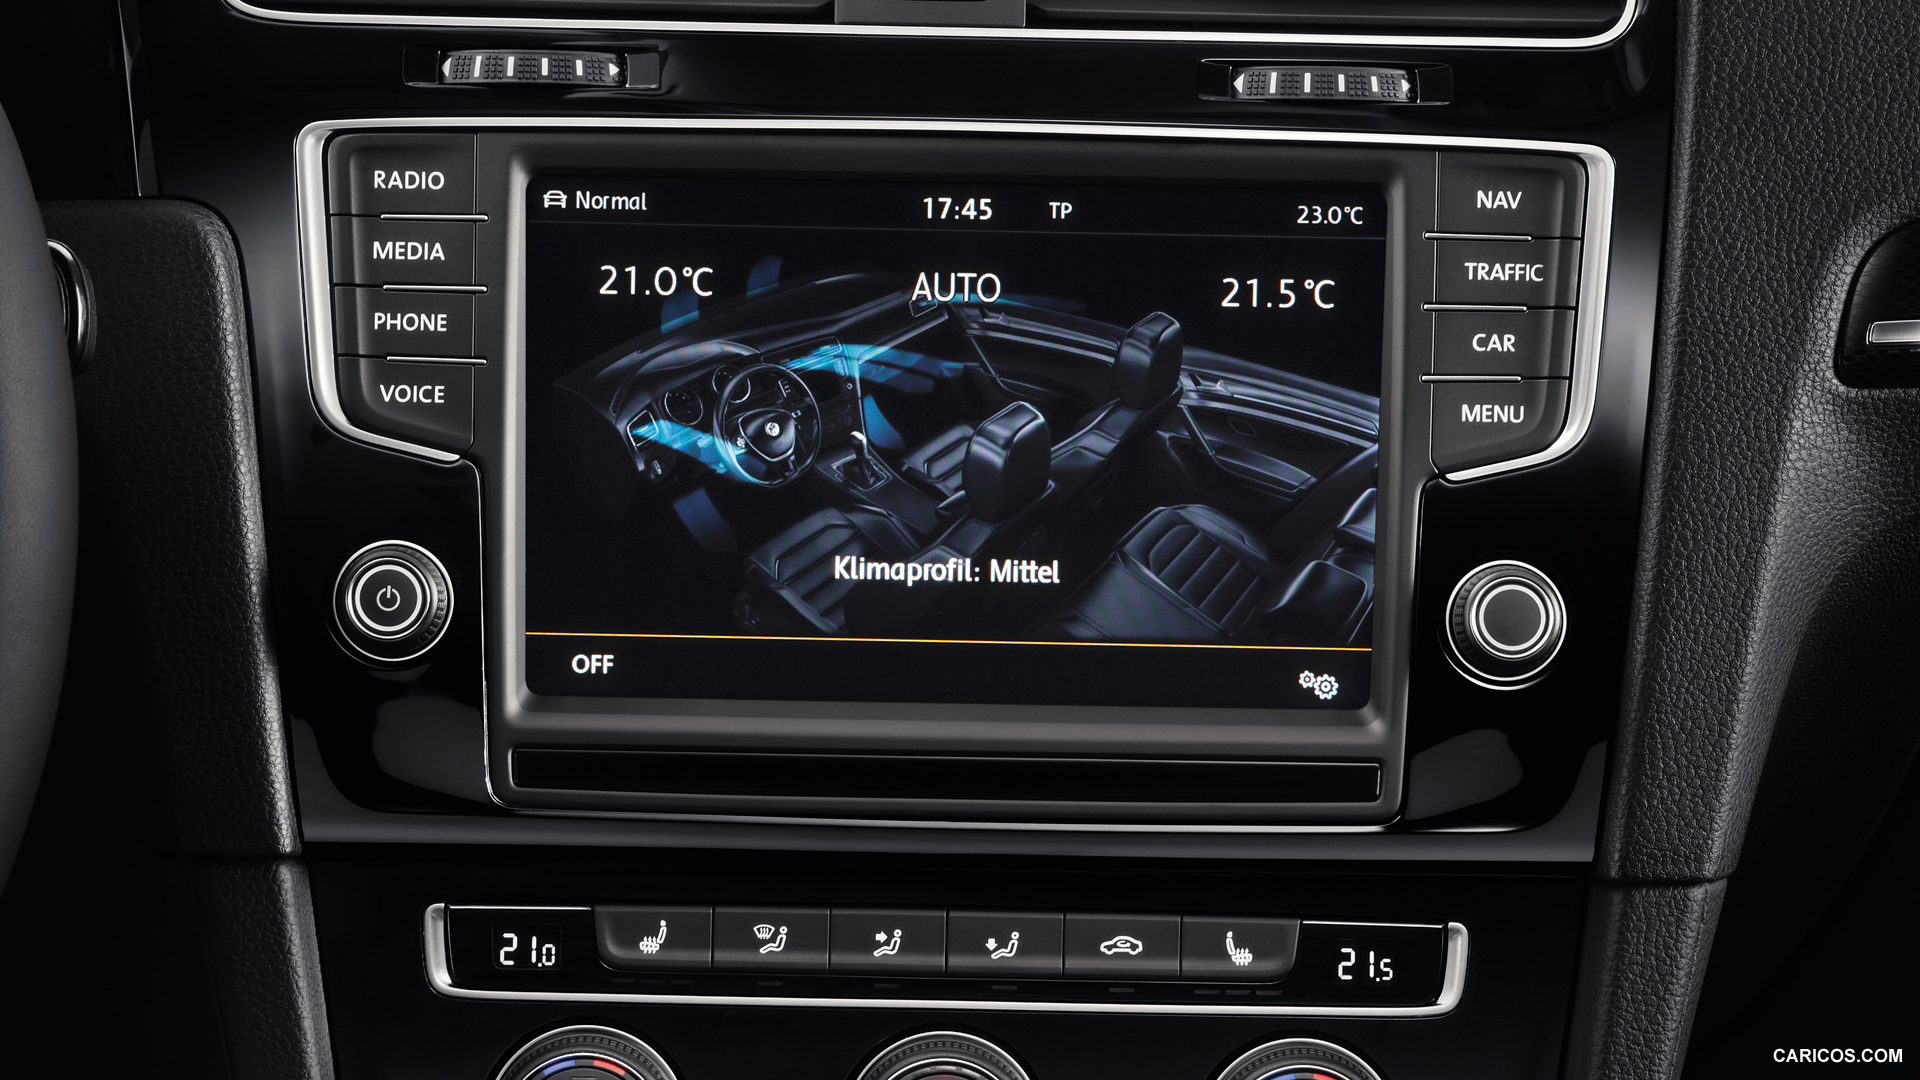 2013 Volkswagen Golf 7 (vii) Radionavigation system